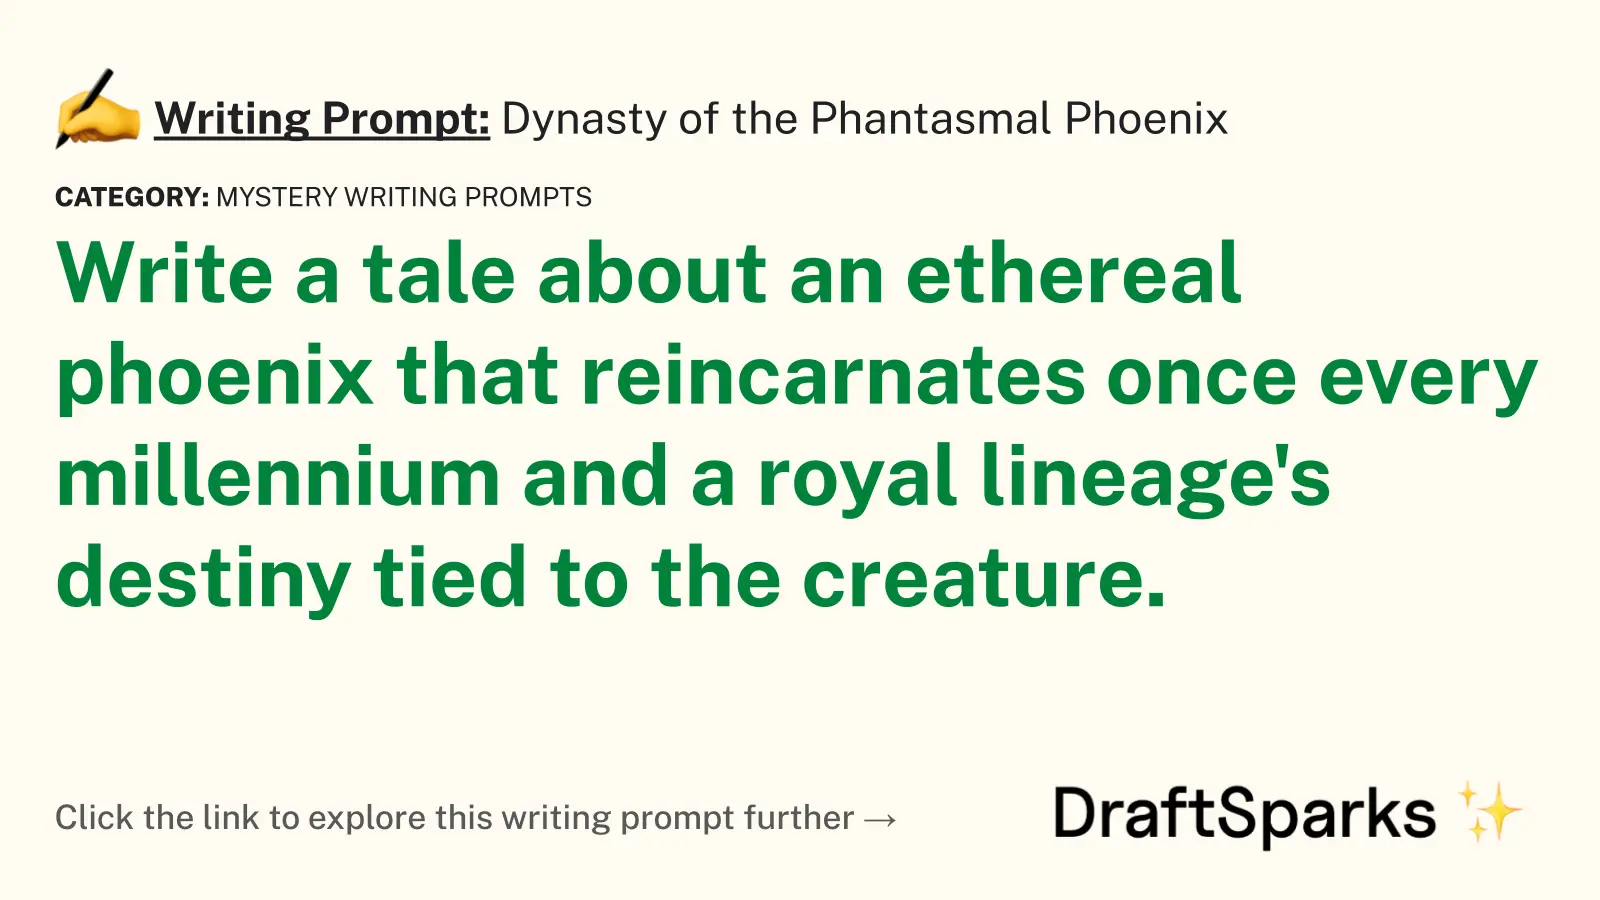 Dynasty of the Phantasmal Phoenix